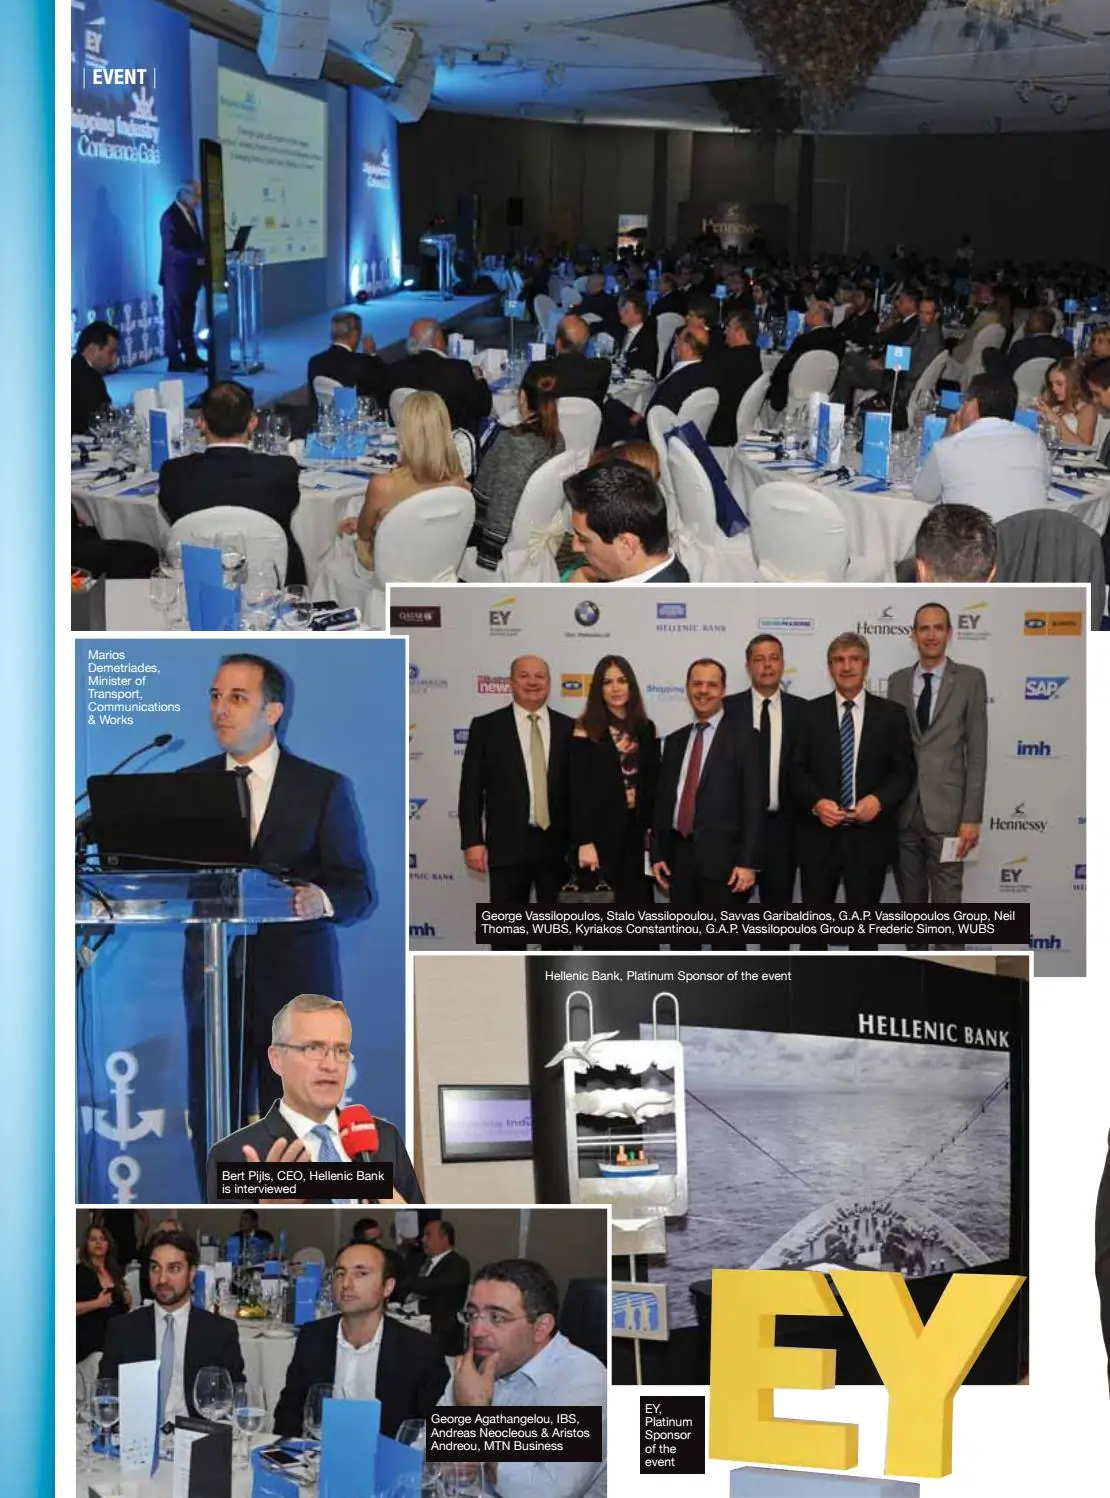 Hellenic bank sponsored events